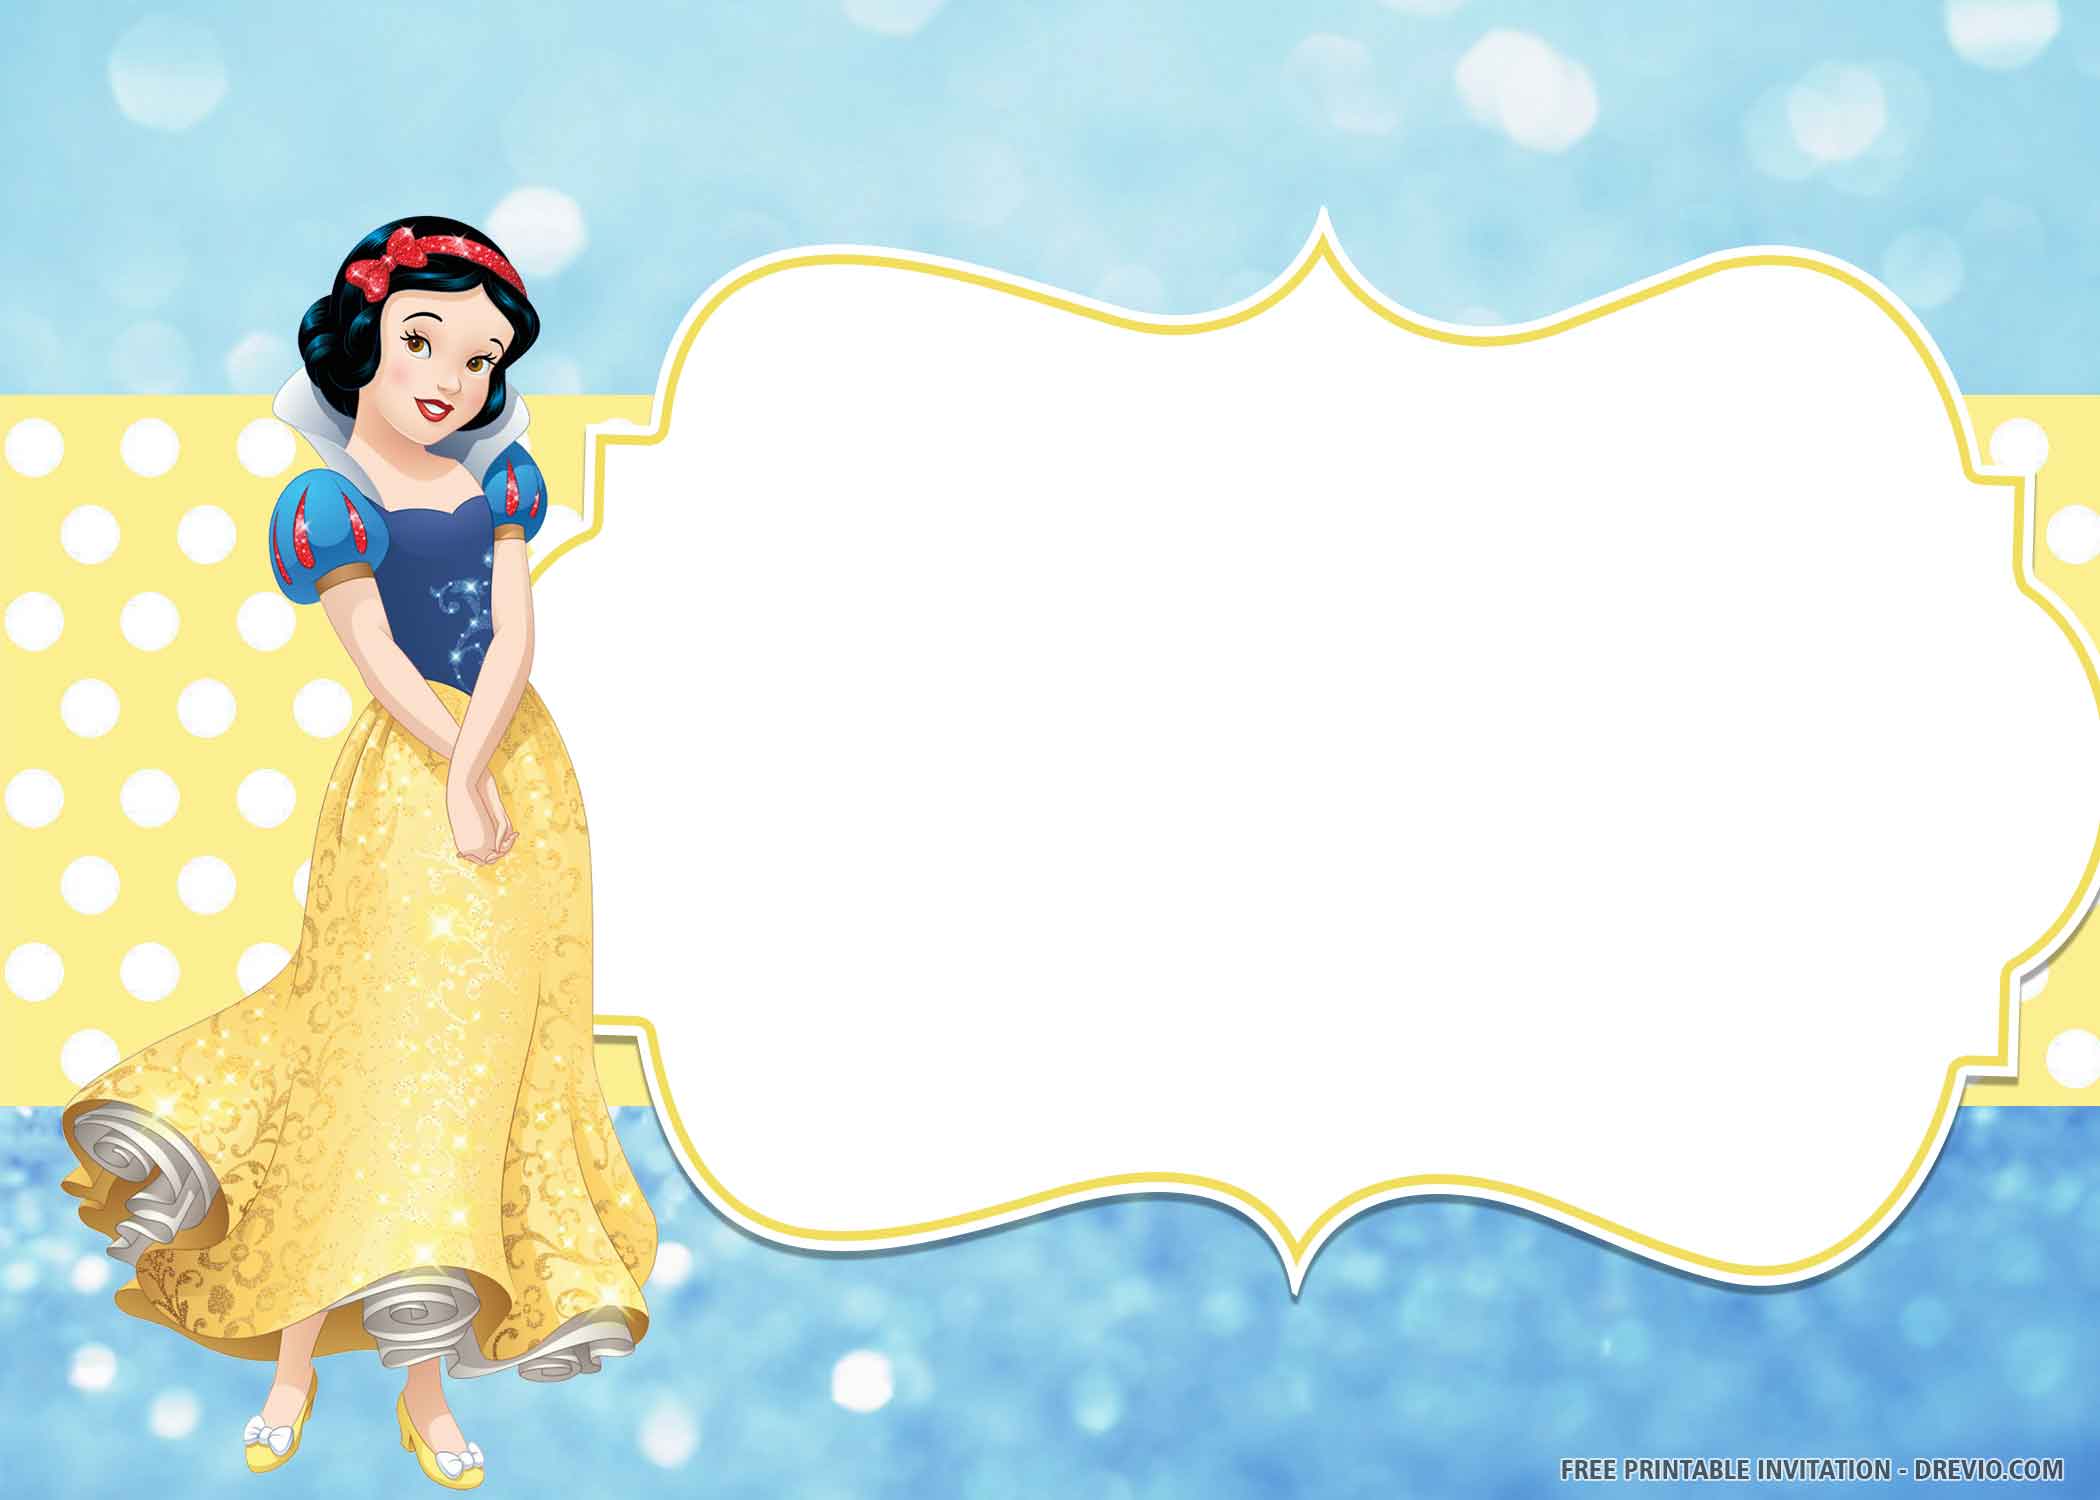 (FREE PRINTABLE) Lovely Poses of Snow White Birthday Invitation